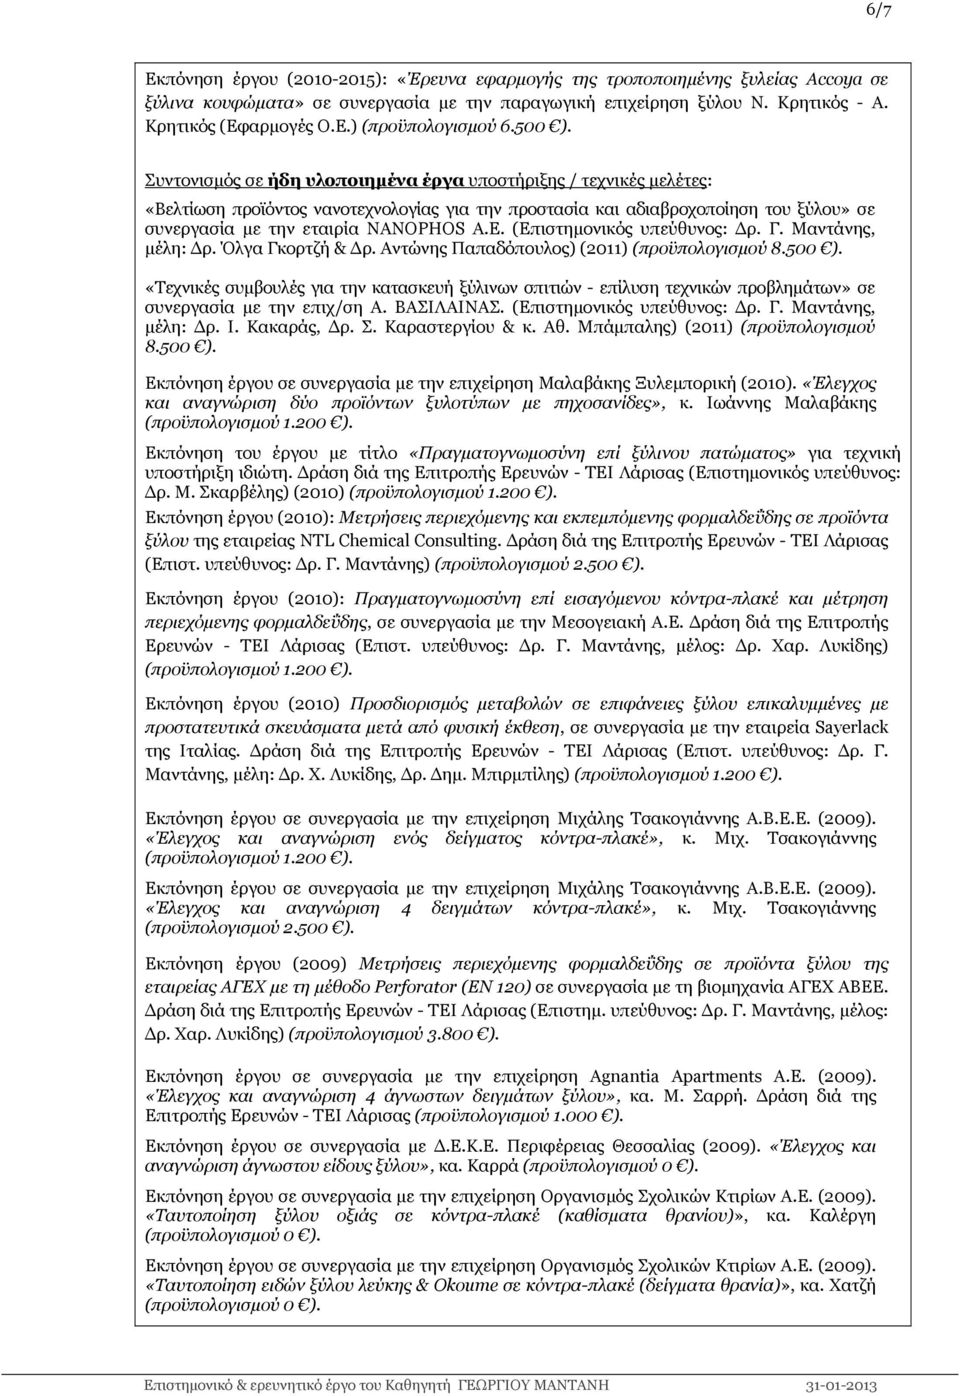 E. (Επιστημονικός υπεύθυνος: Δρ. Γ. Μαντάνης, μέλη: Δρ. Όλγα Γκορτζή & Δρ. Αντώνης Παπαδόπουλος) (2011) (προϋπολογισμού 8.500 ).